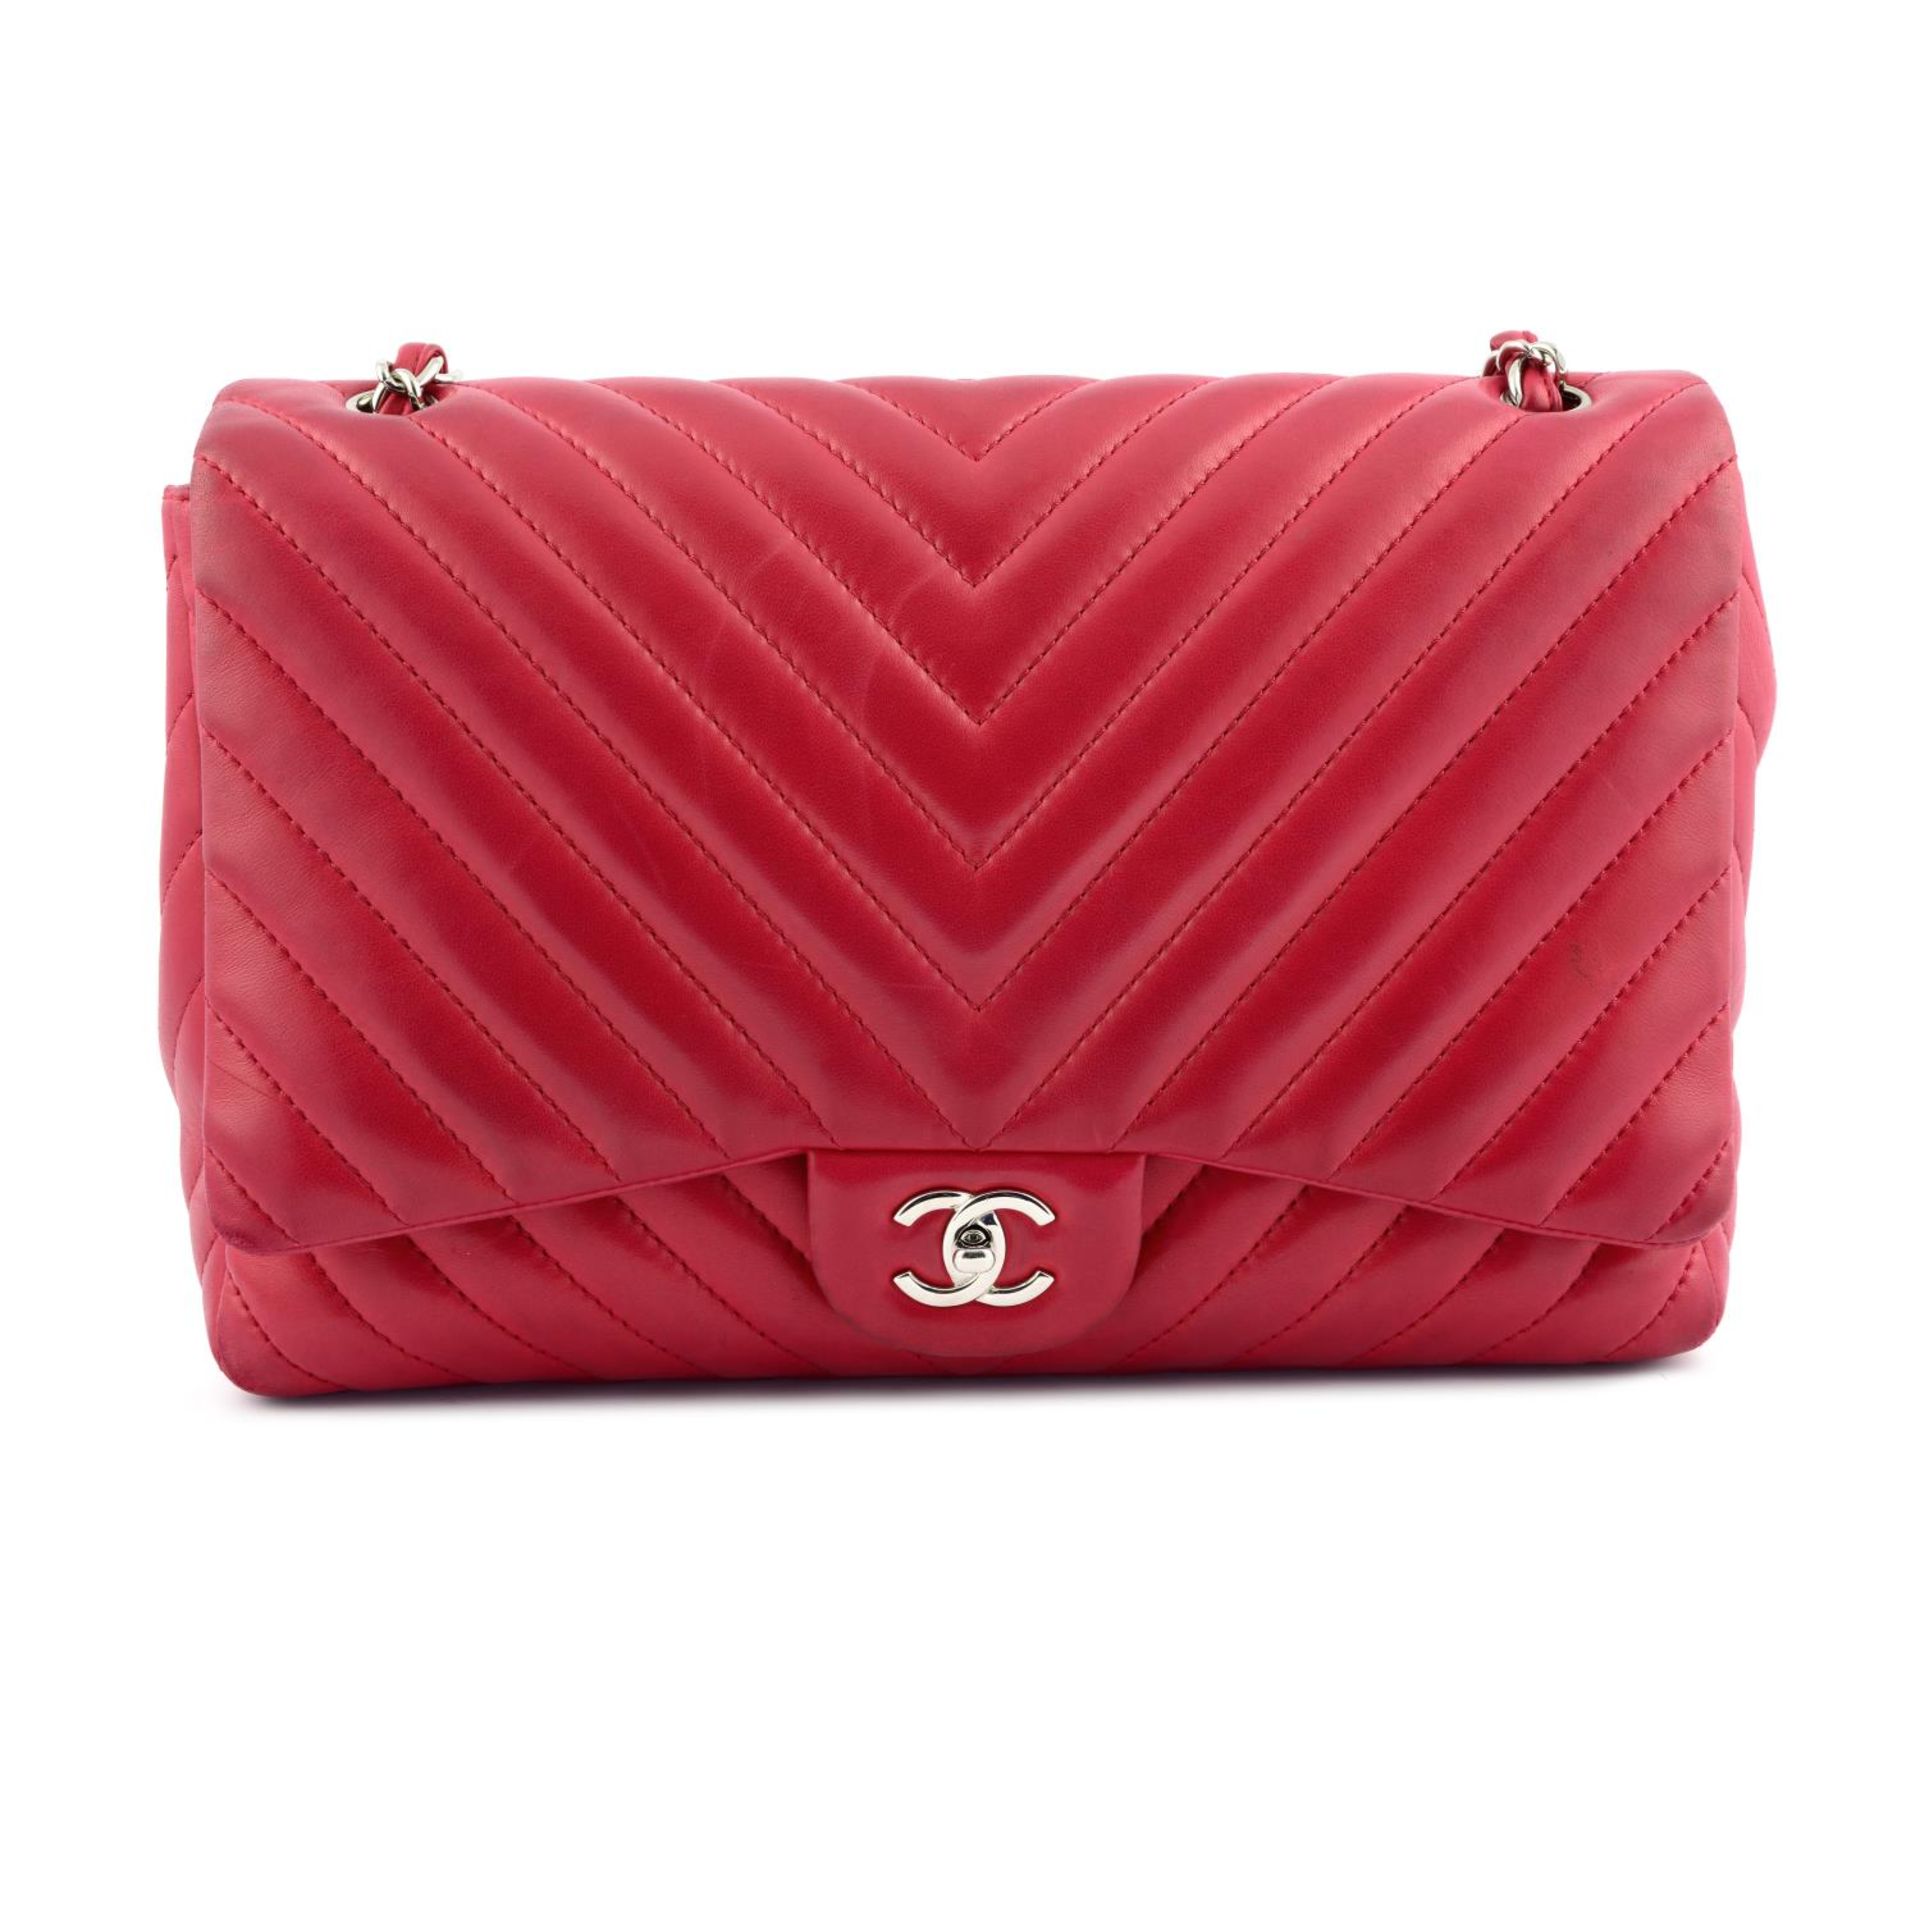 CHANEL - an amaranth red Maxi Classic Flap handbag.